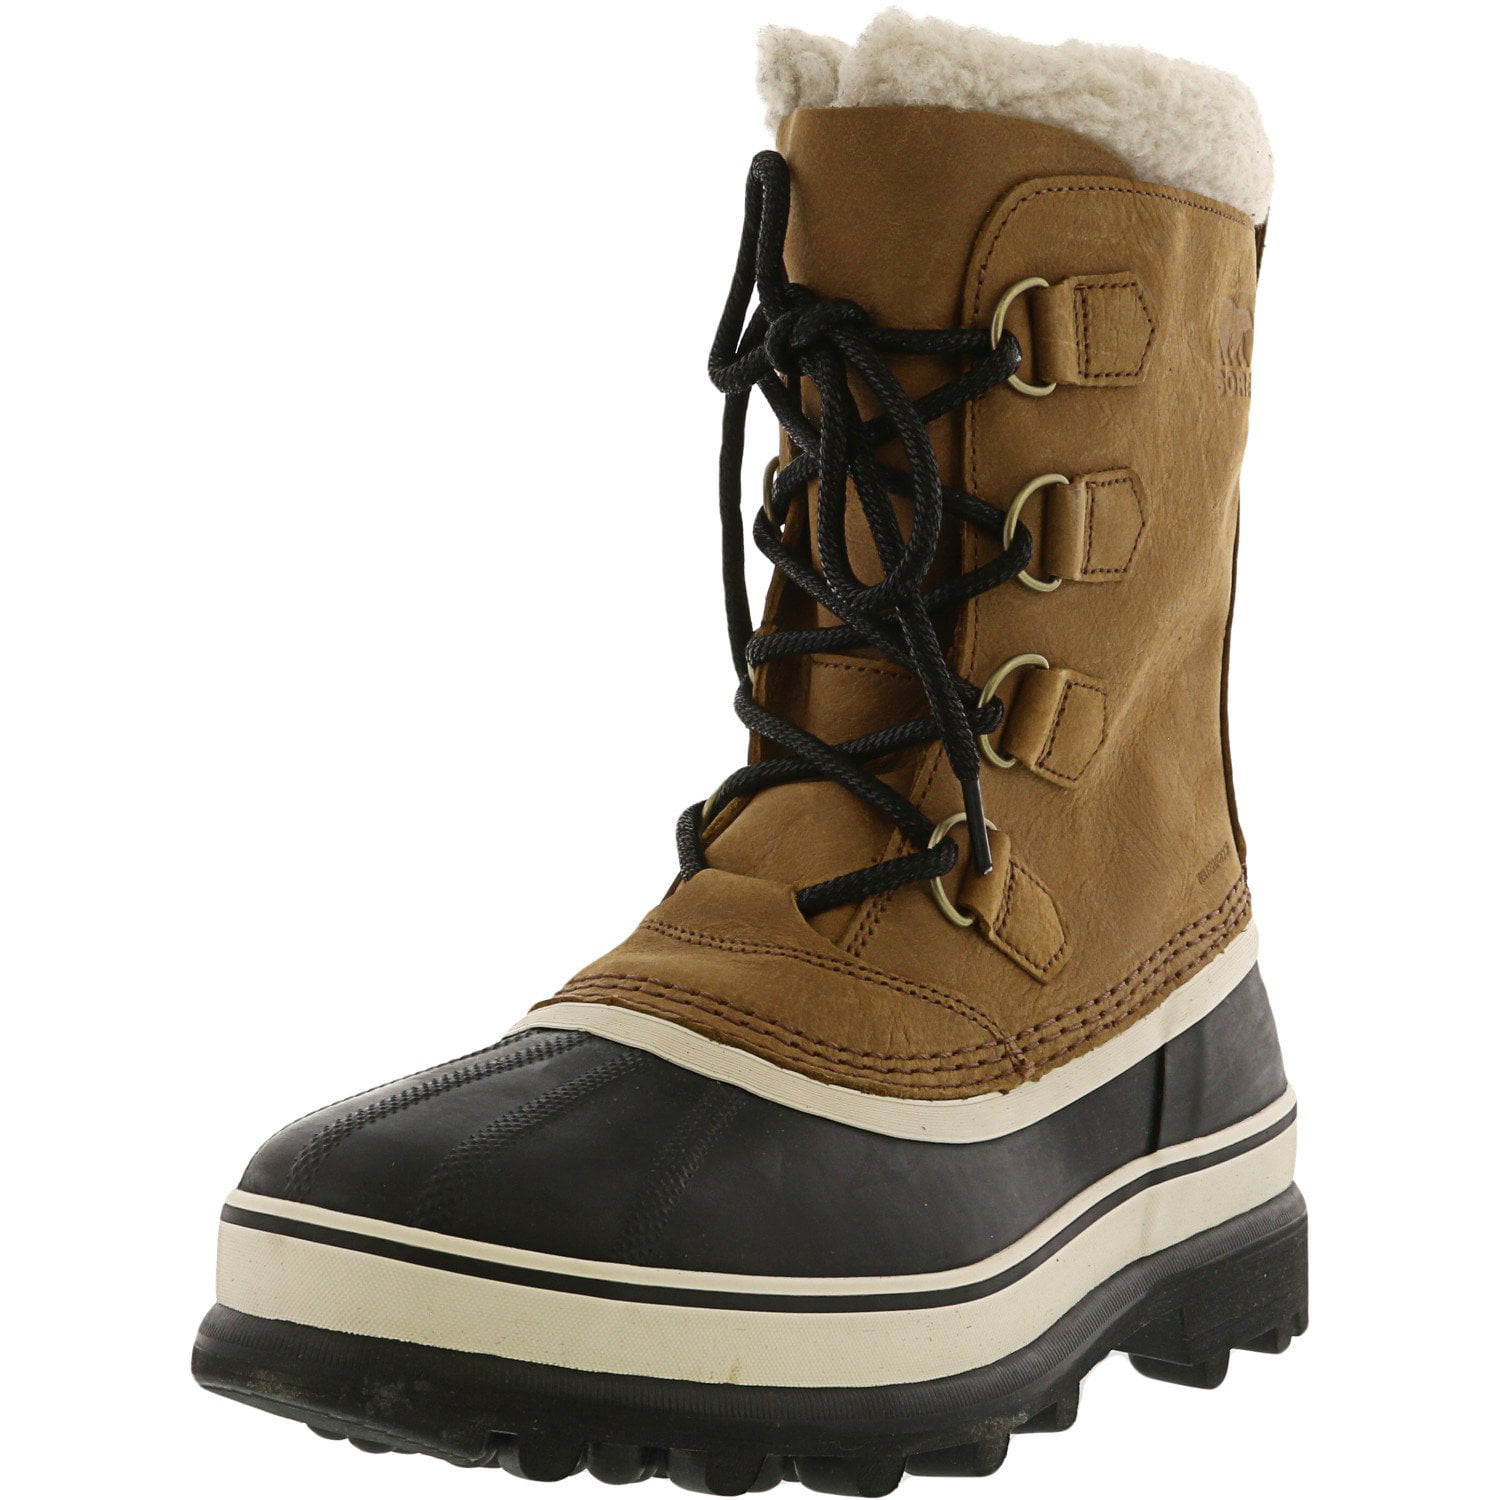 SOREL - Sorel Women's Caribou Wl Elk Mid-Calf Leather Snow Boot - 9M ...